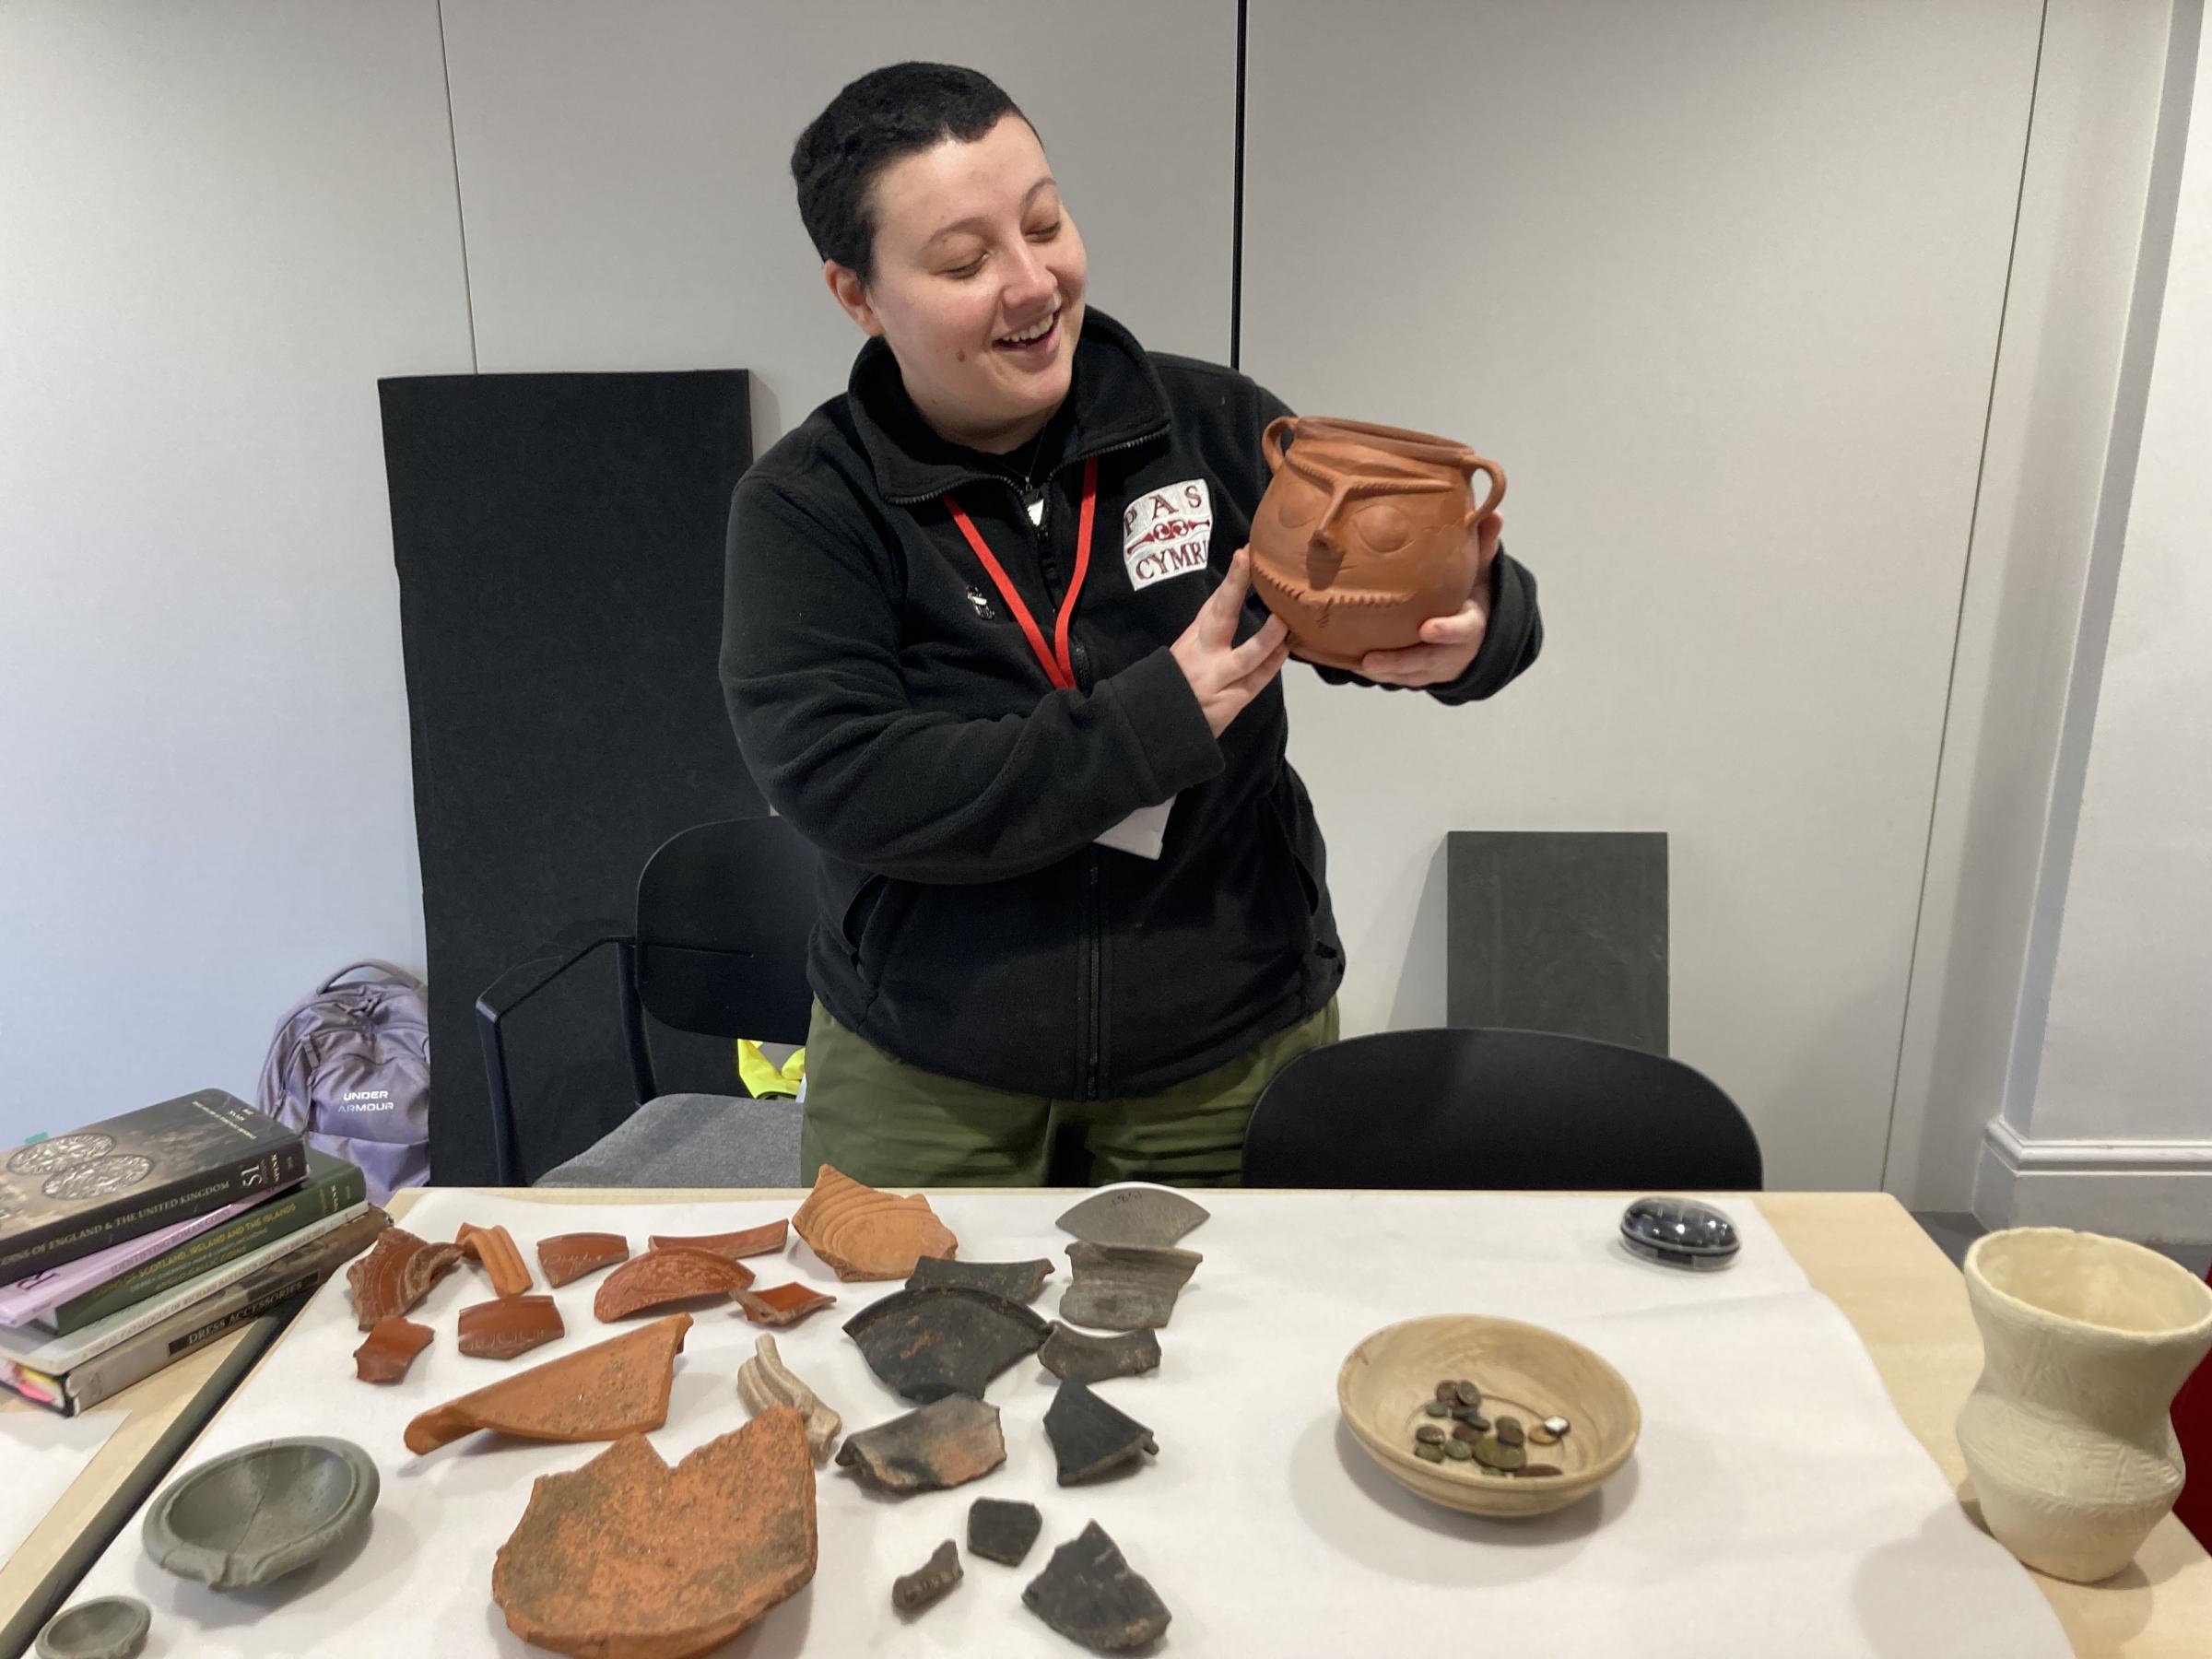 Clara De Sousa Cunha with Roman Pottery finds and a recreated Roman clay pot she made (Image Dale Spridgeon)